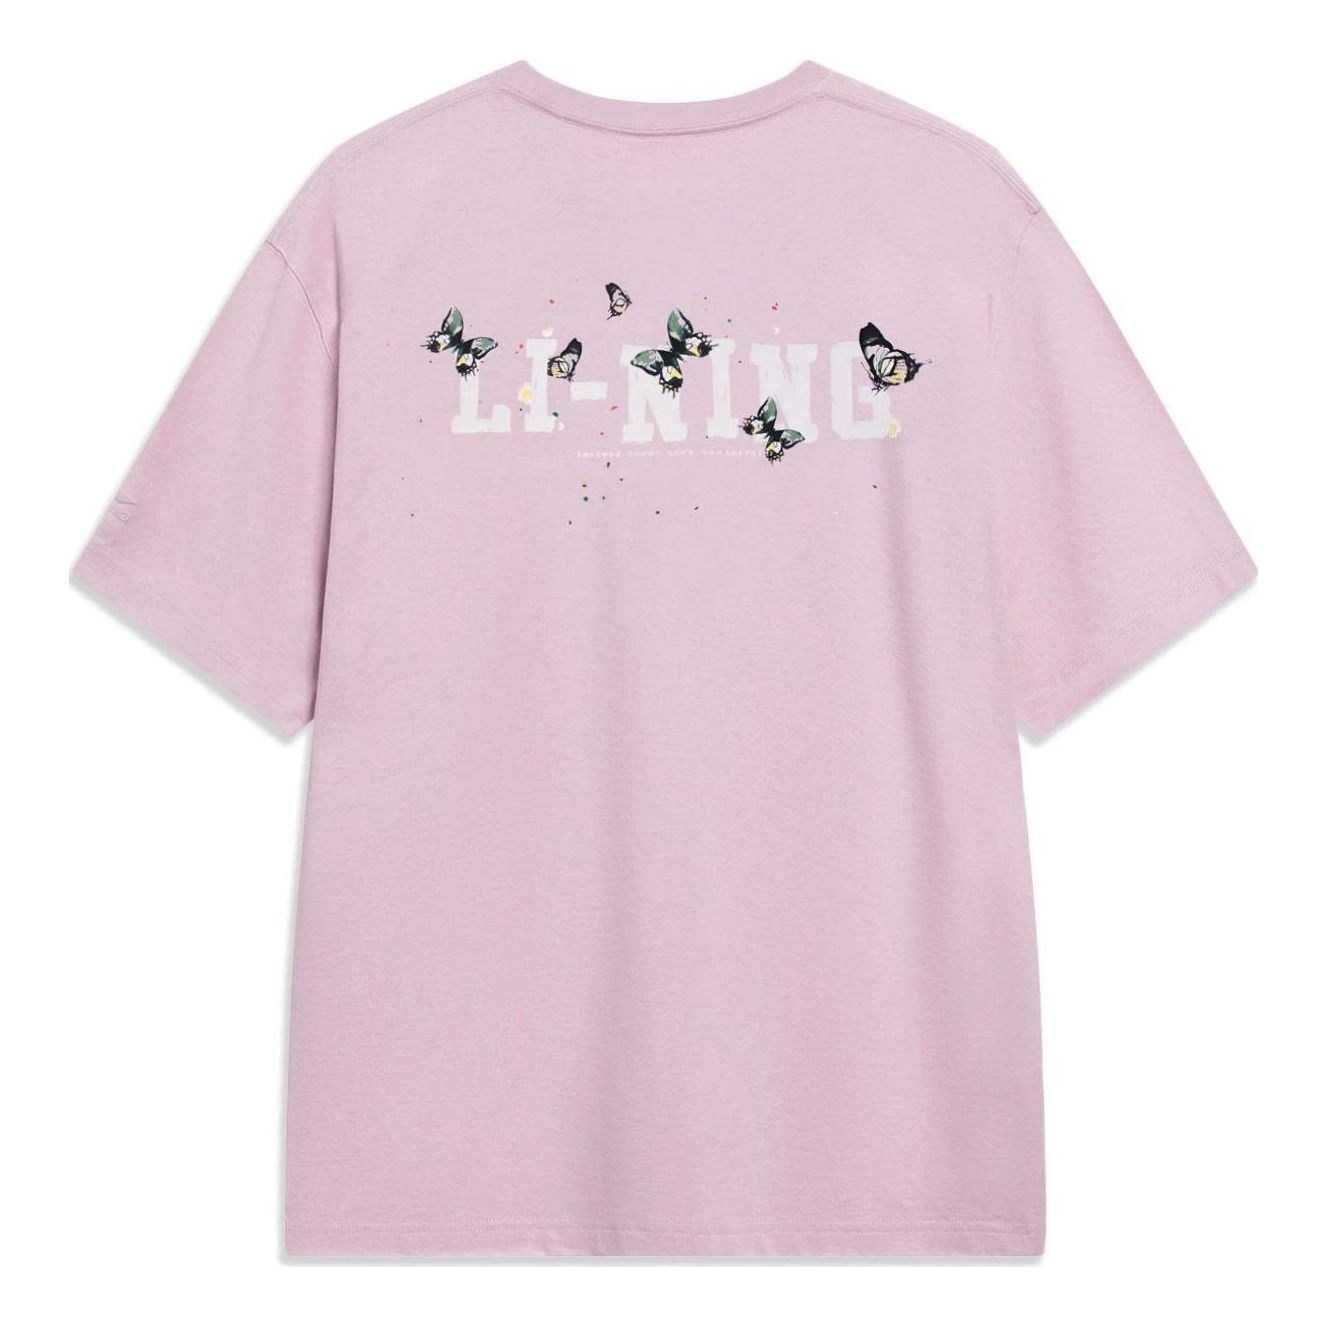 Li-Ning Butterfly Graphic T-shirt 'Pink' AHST205-5 - 2